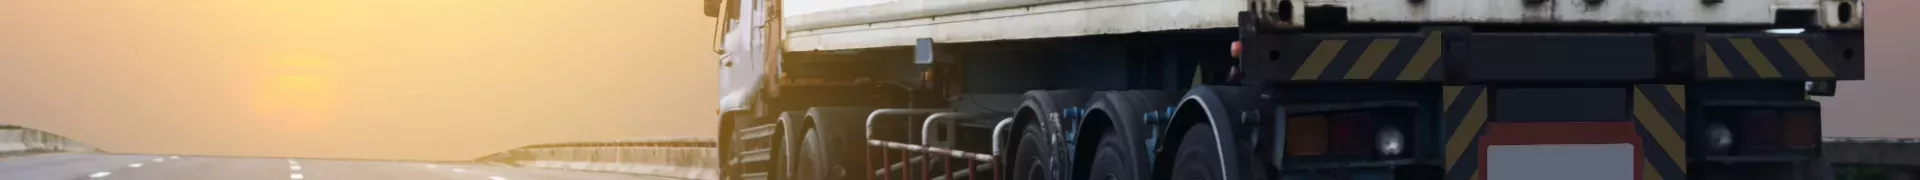 Antivol camion